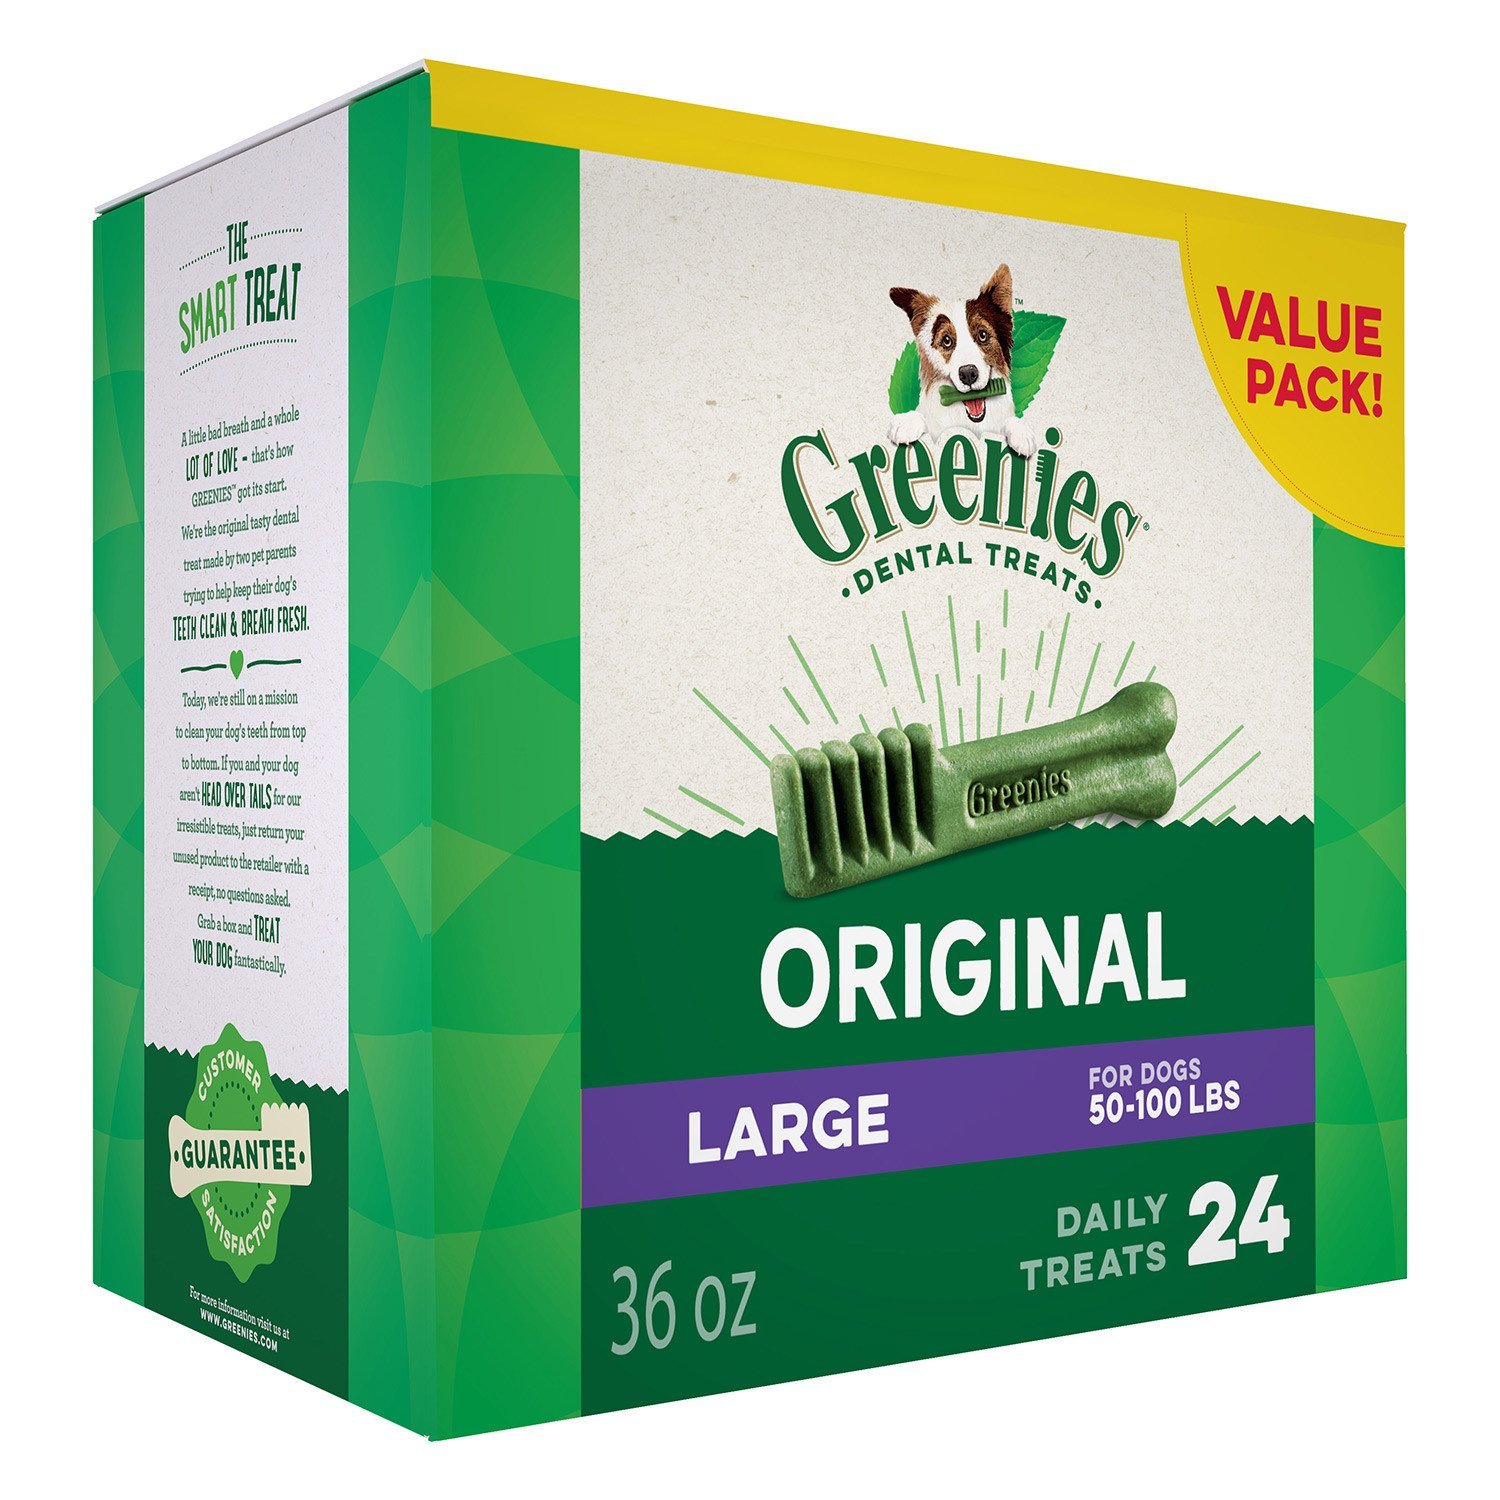 36oz box of Greenies dental dog treats for $18